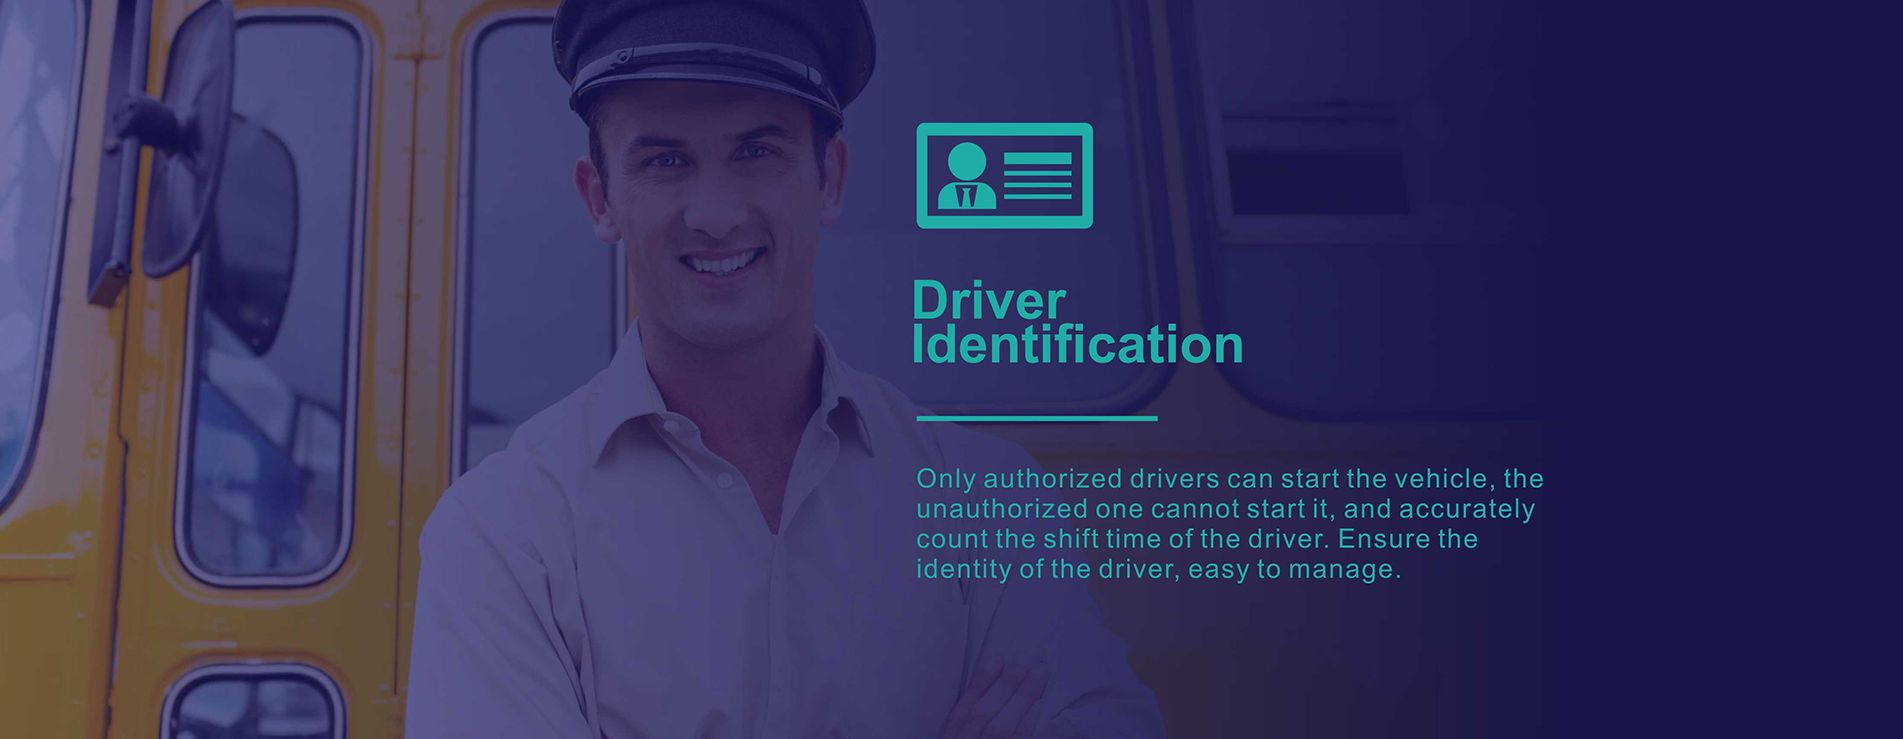 driver identification